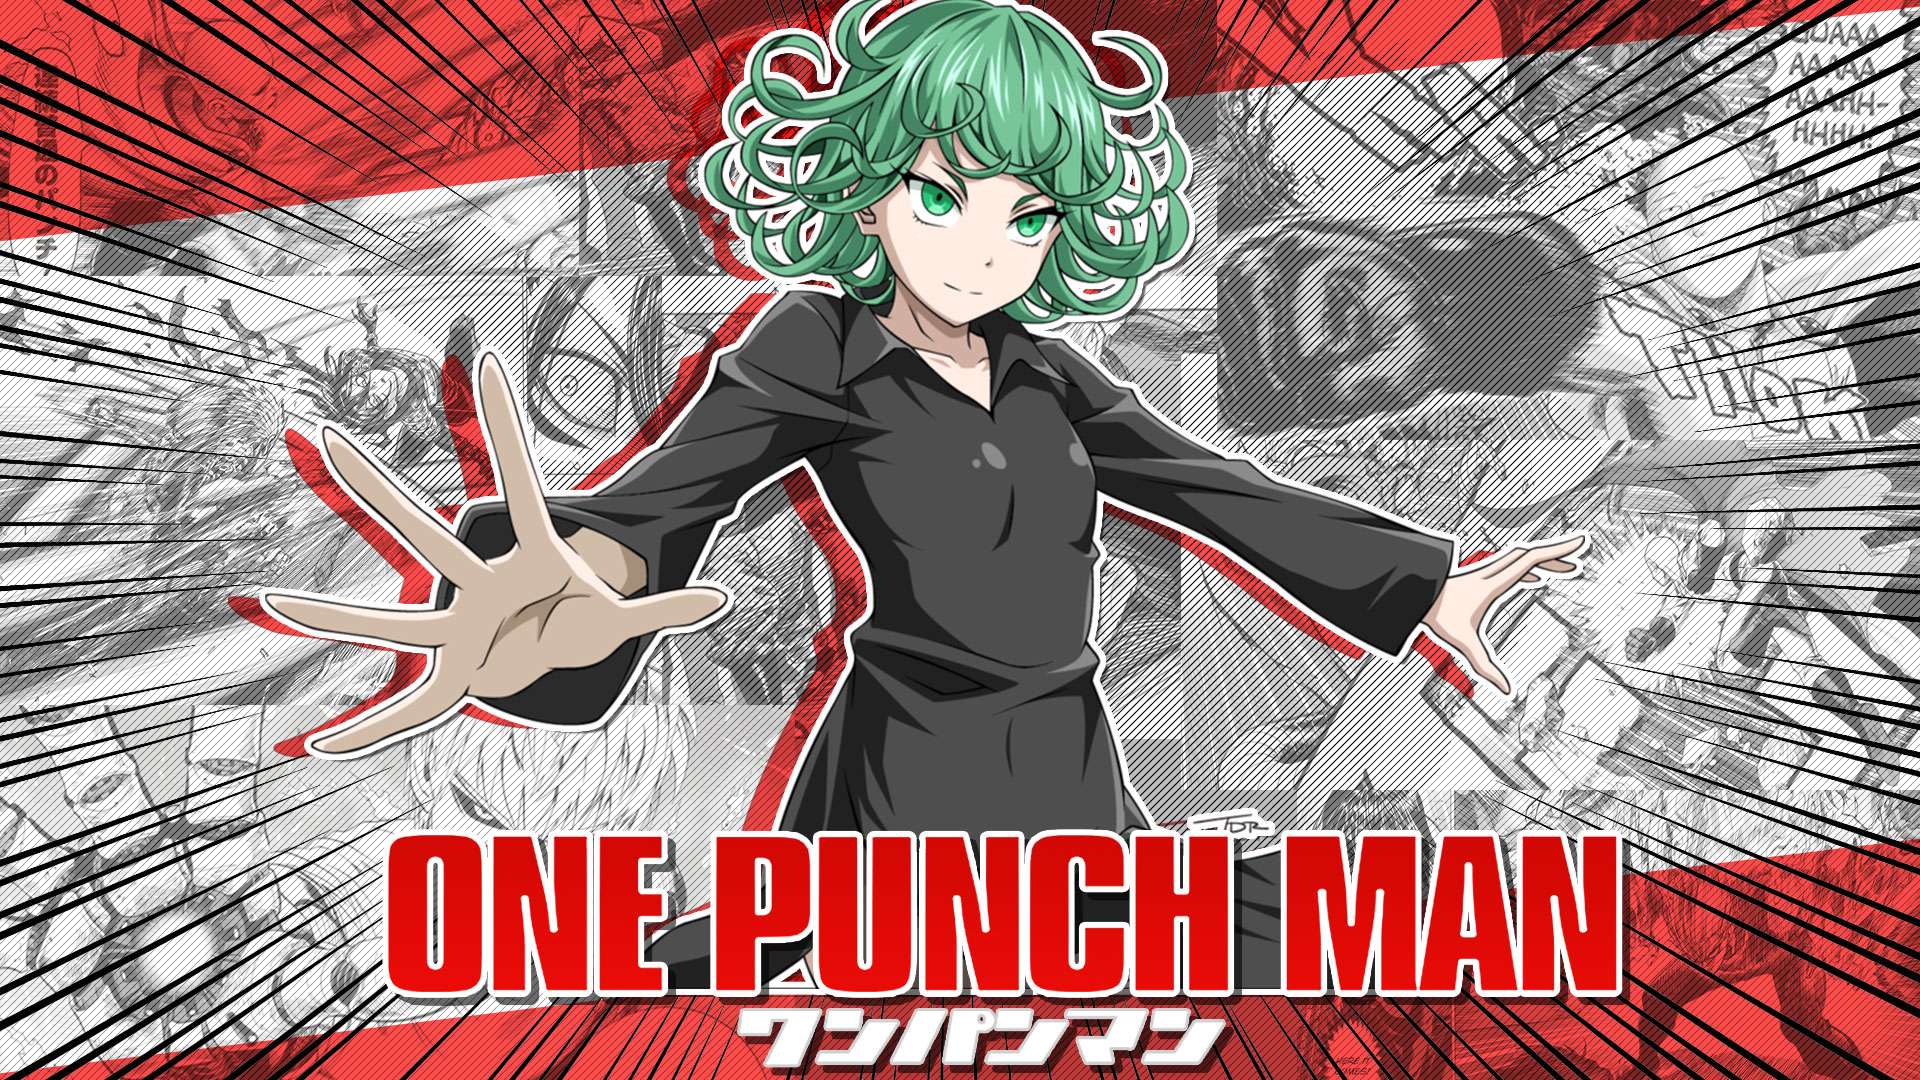  Tatsumaki (One Punch Man) HQ Background Wallpapers